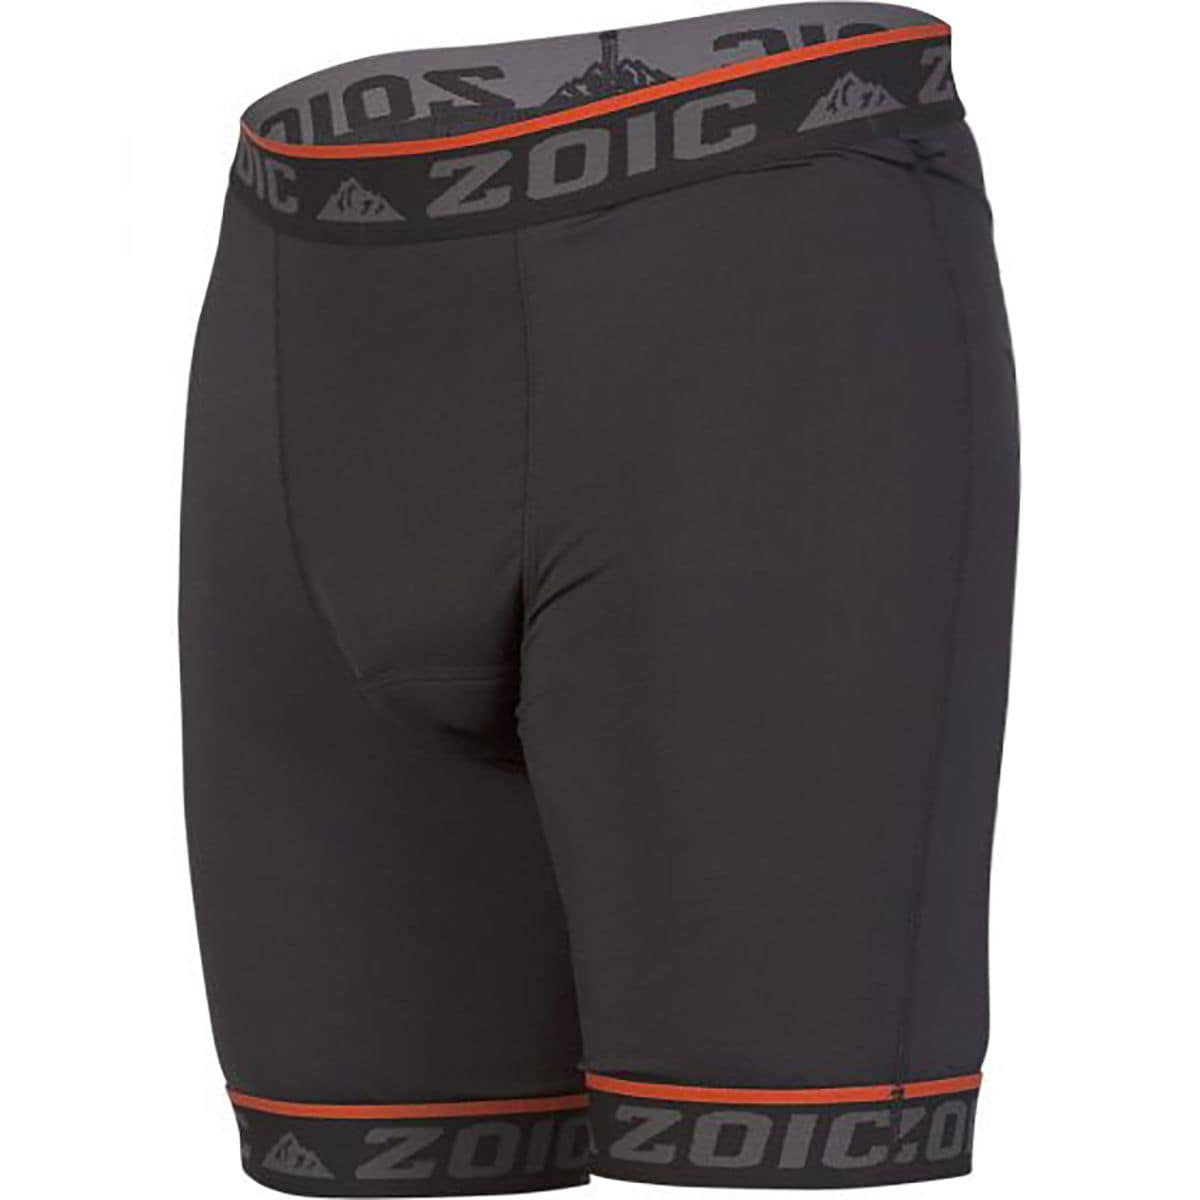 ZOIC Premium Liner Shorts - Men's - Bike